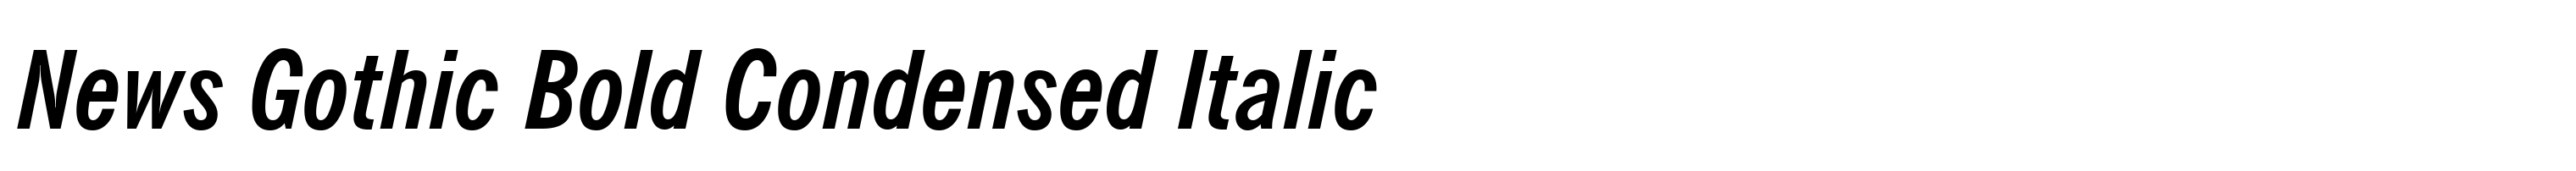 News Gothic Bold Condensed Italic